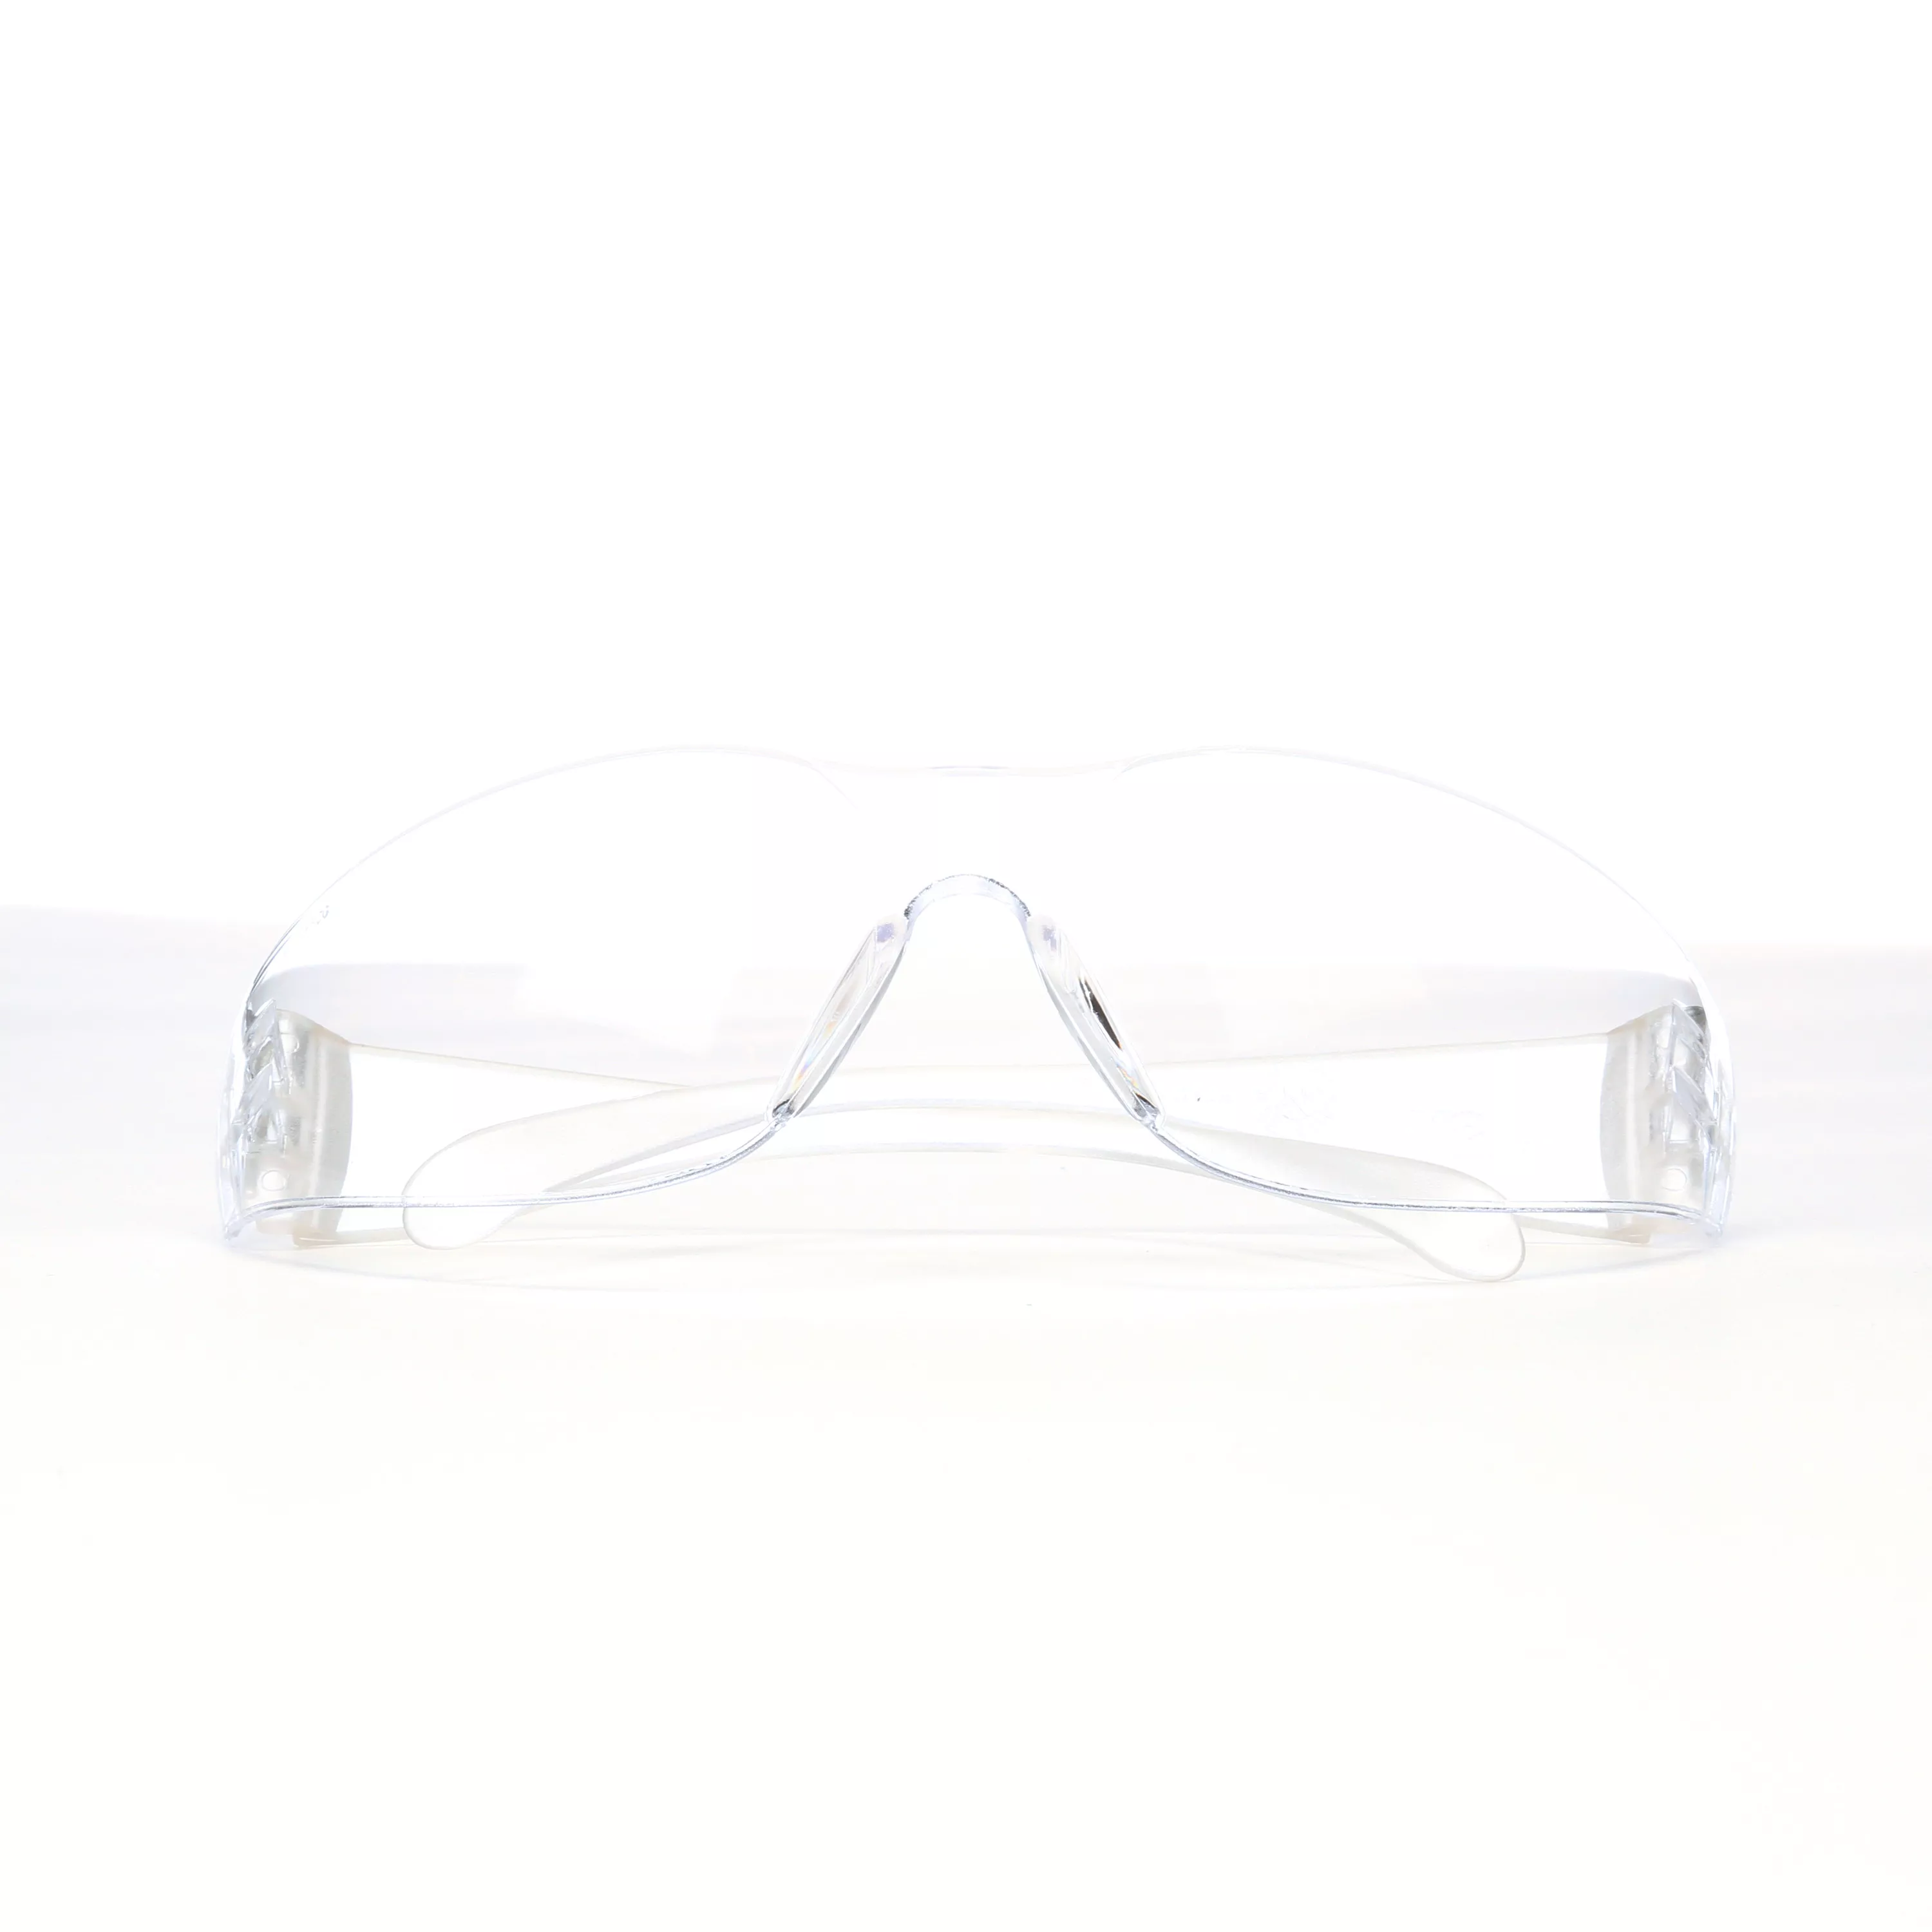 3M™ Virtua™ Protective Eyewear 11329-00000-100 Clear Temples Clear
Anti-Fog Lens, 100 EA/Case